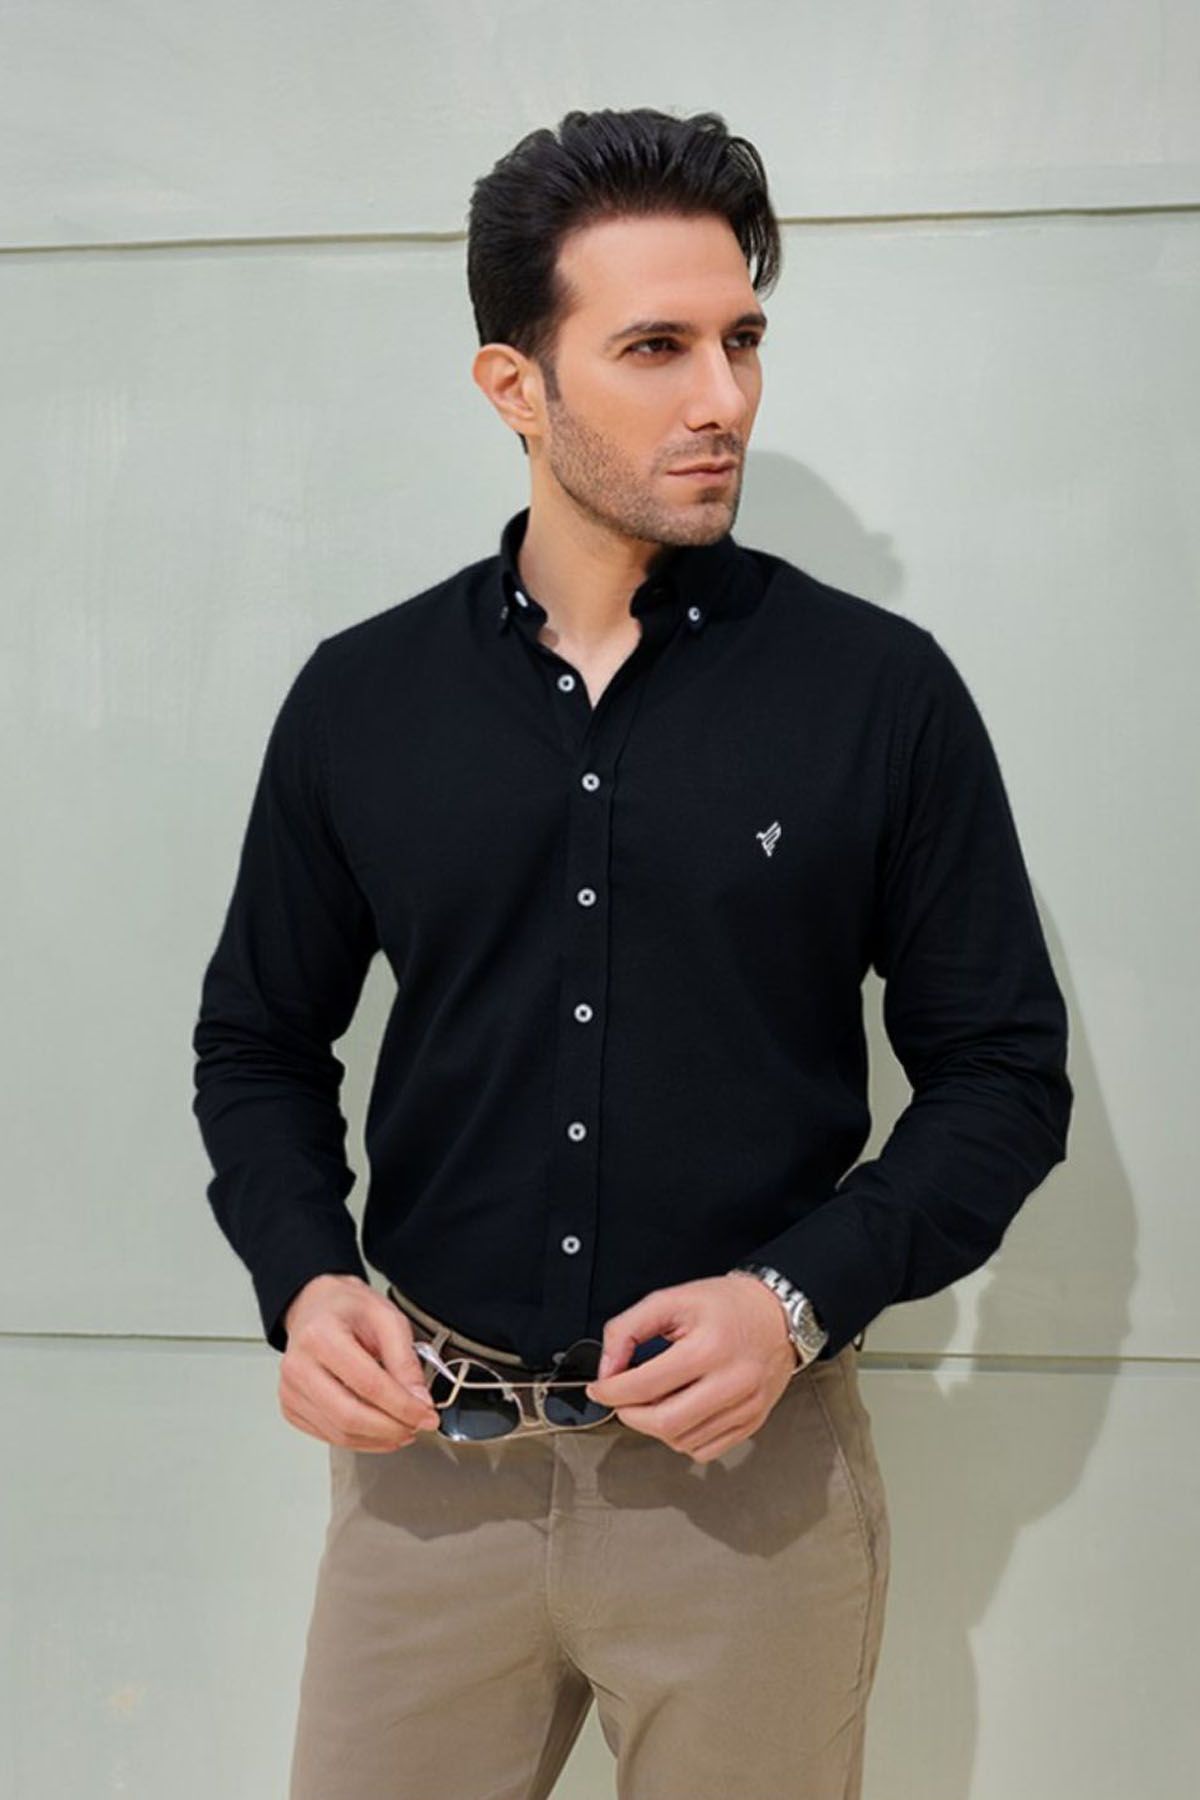 FITTED Black Button Down Shirt (Modern Fit) Black Men Shirts